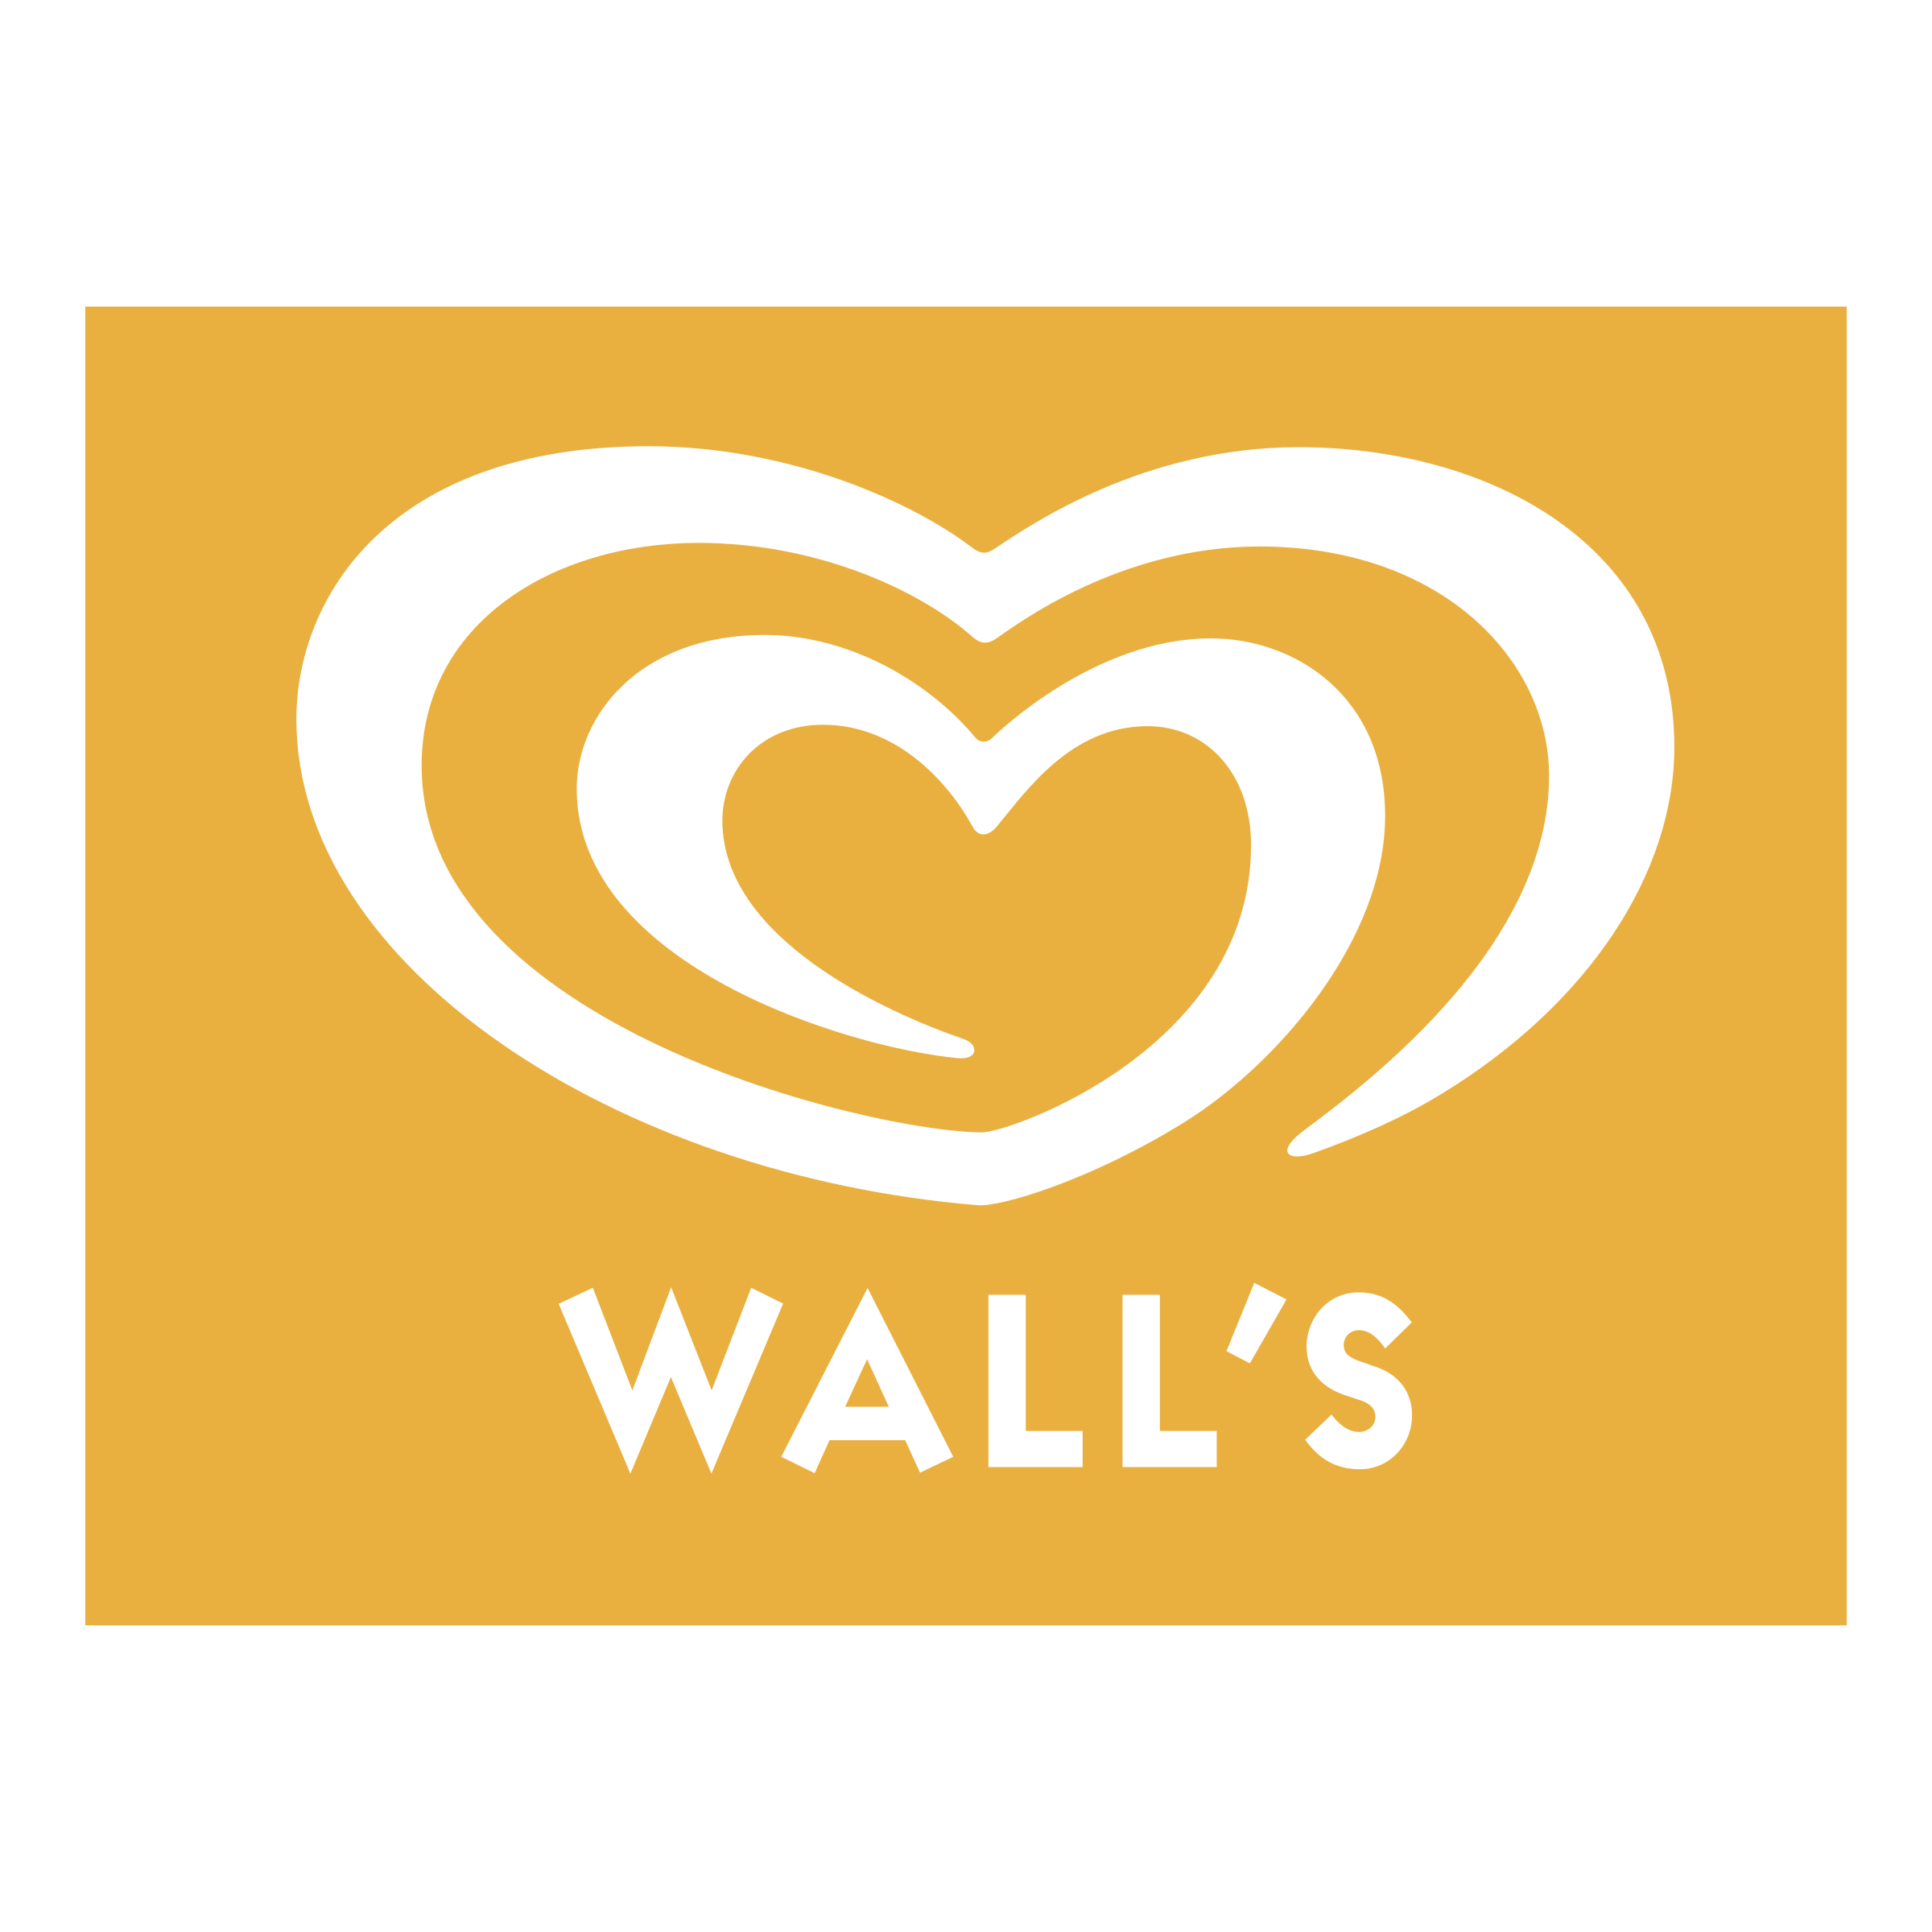 Wall's Logo - Wall's Logo PNG Transparent & SVG Vector